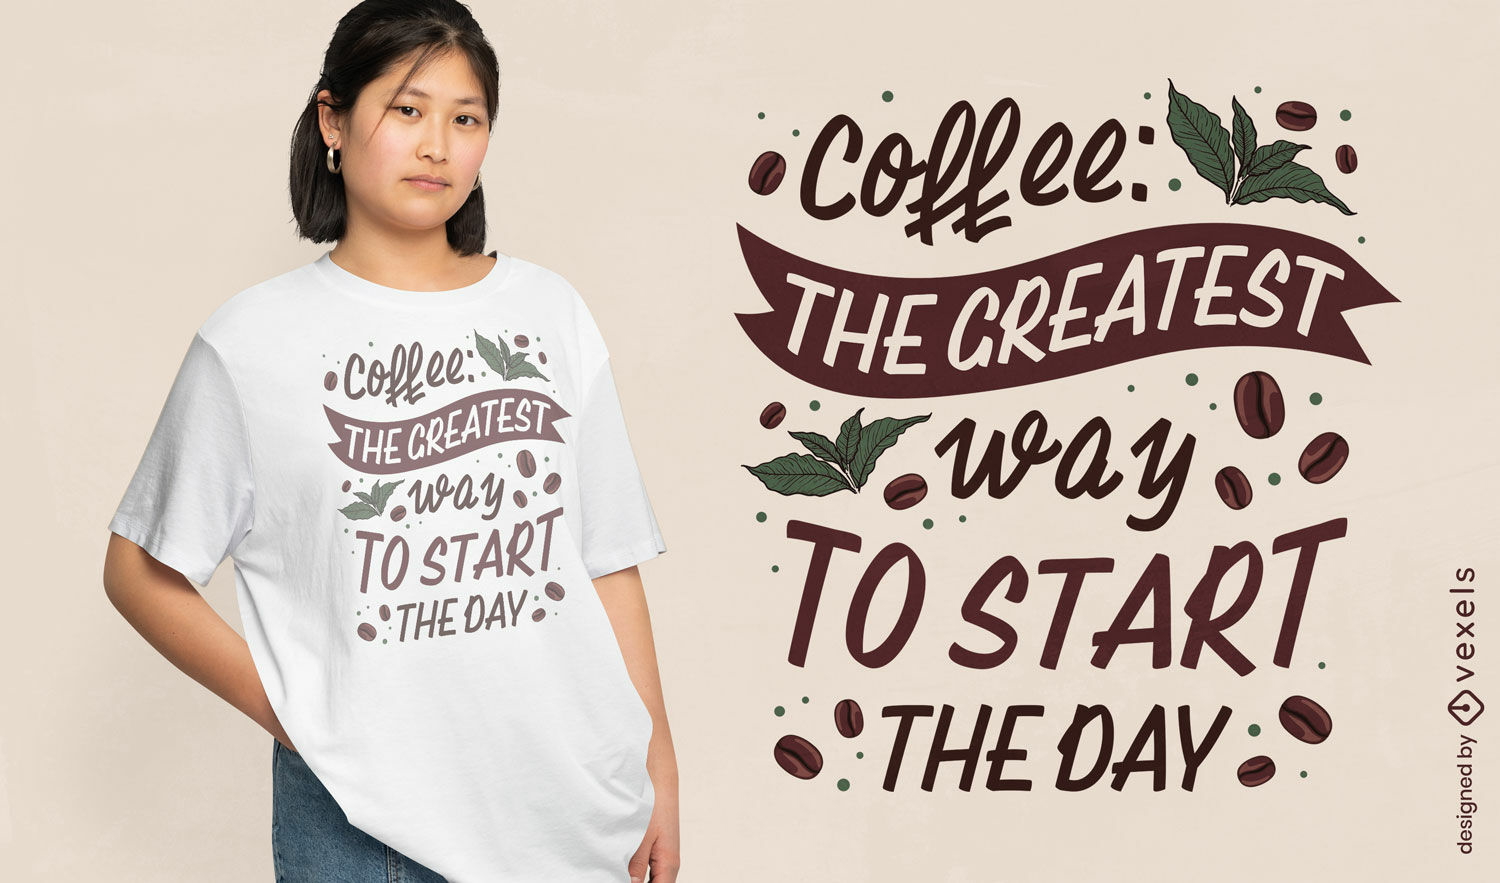 Diseño de camiseta motivacional de café de la mañana.